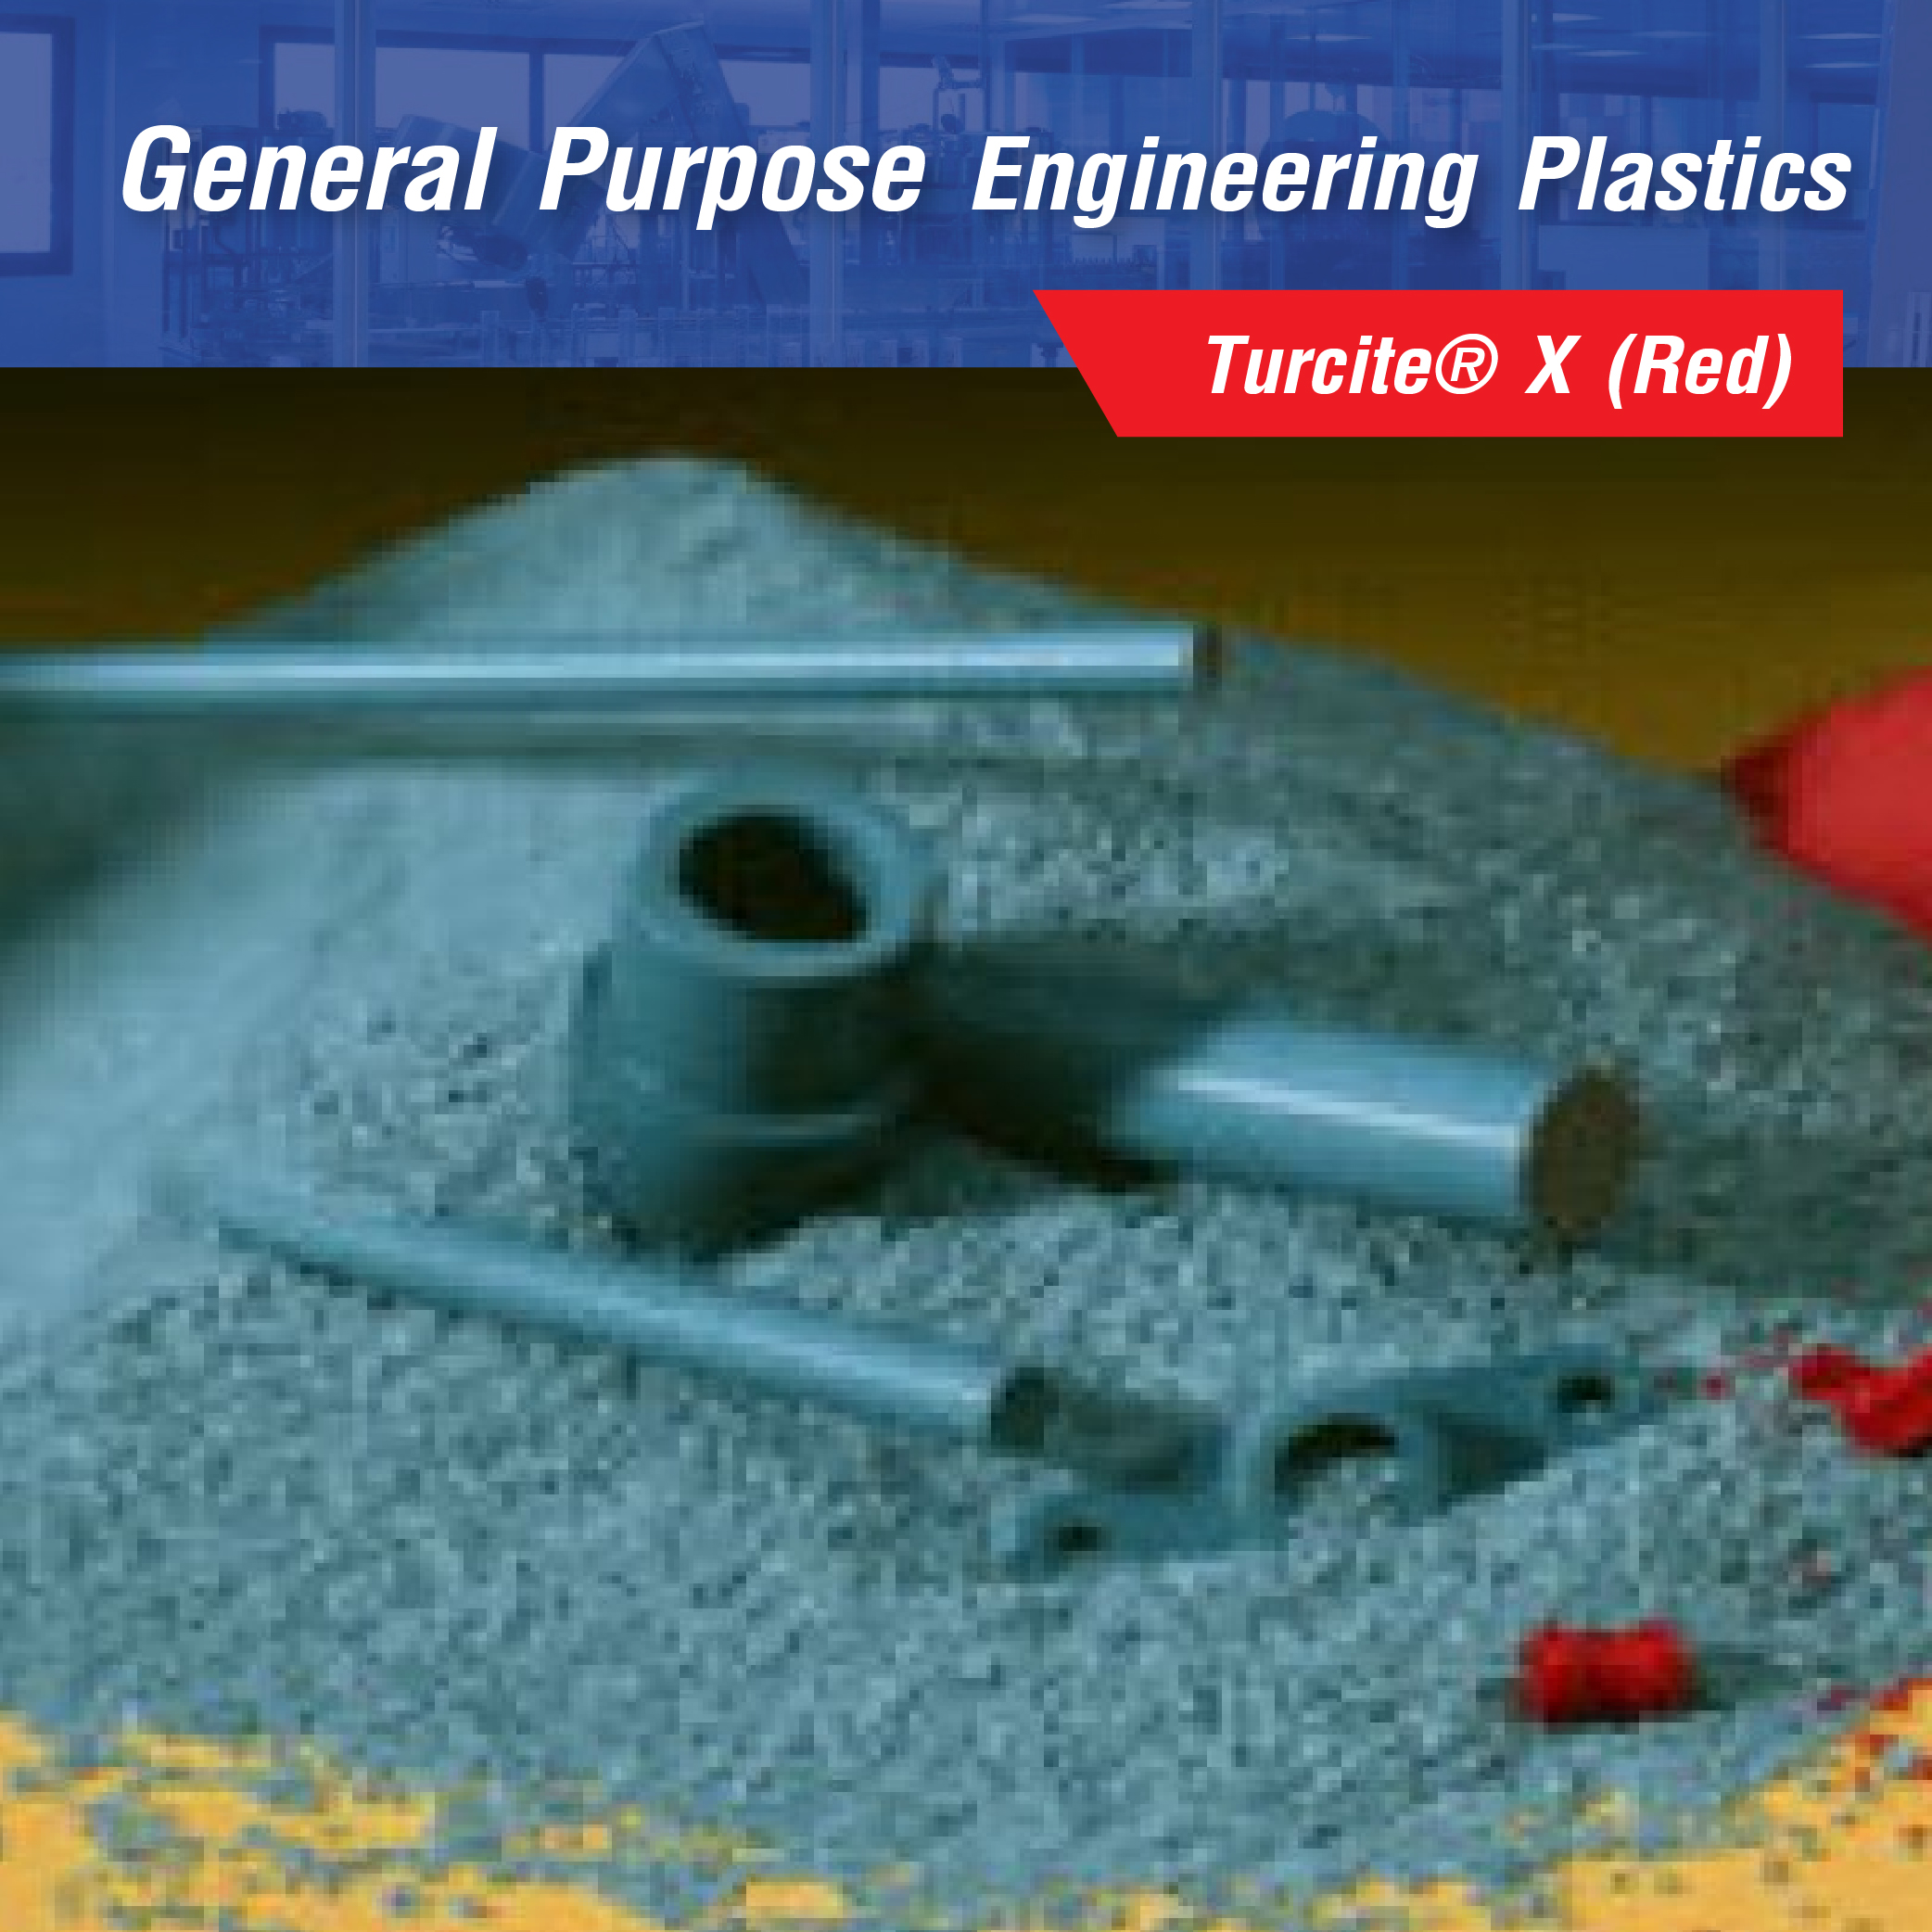 General Purpose Engineering Plastics